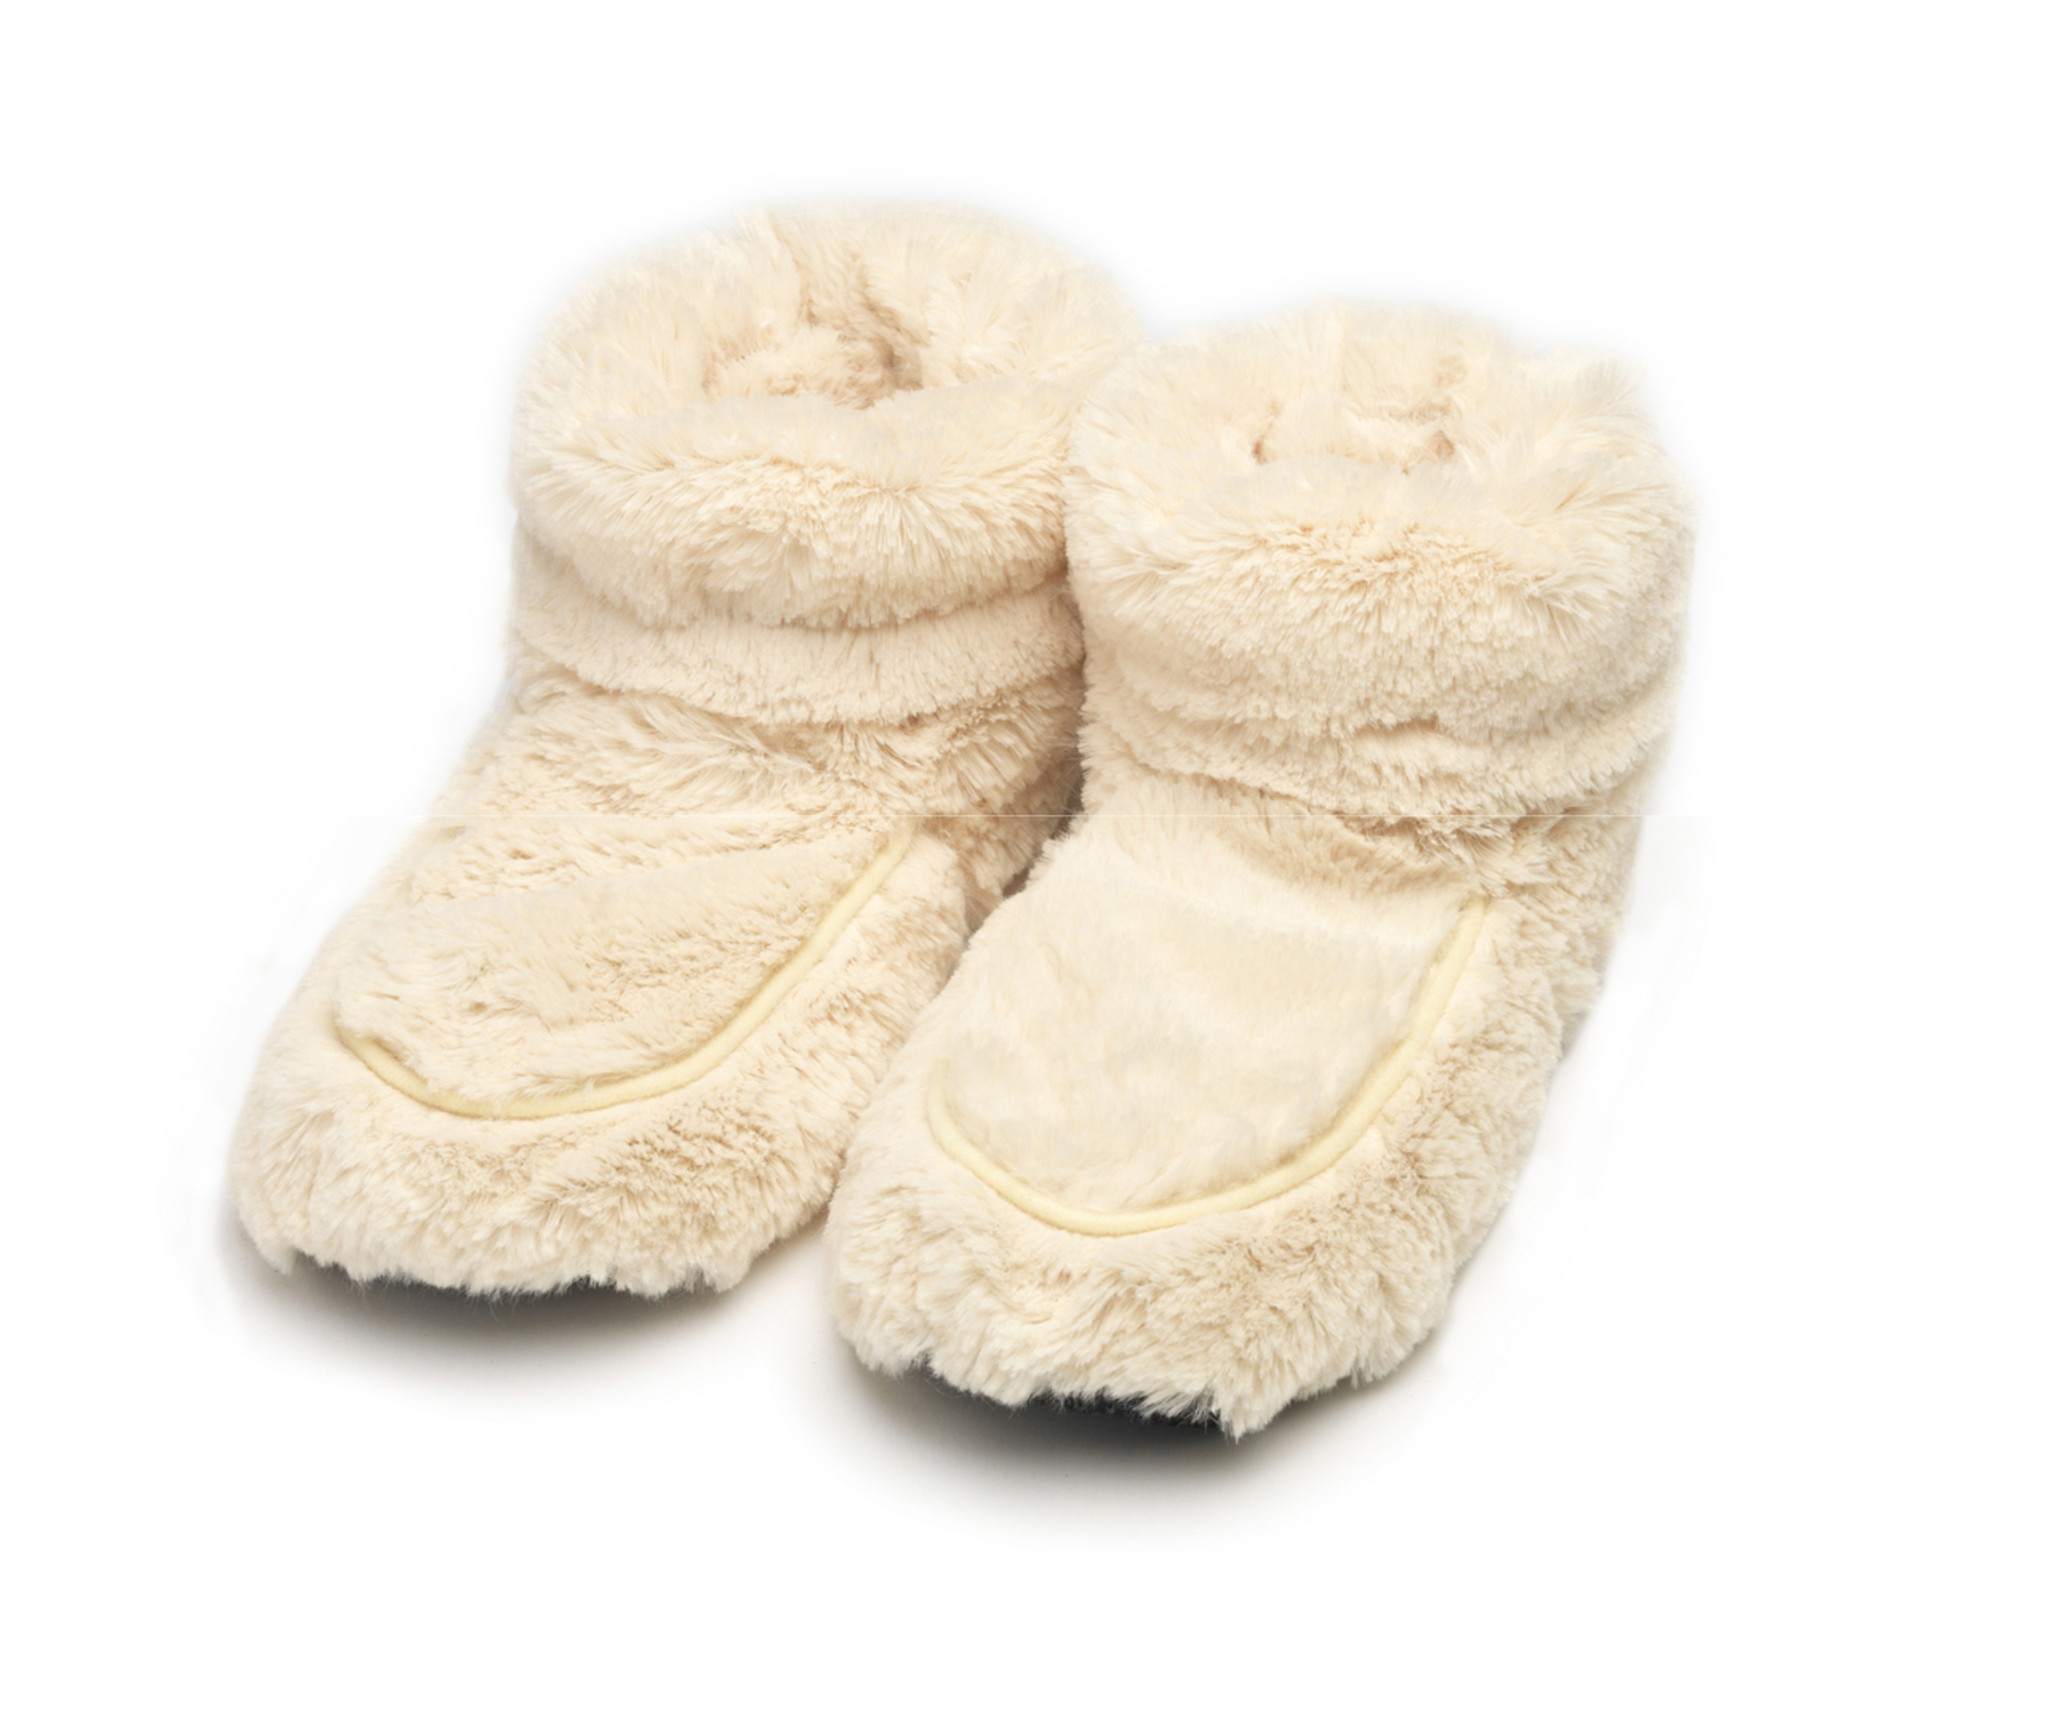 Intelex Cozy Body Cream Fur Microwavable Slipper Boots | Heat Treats